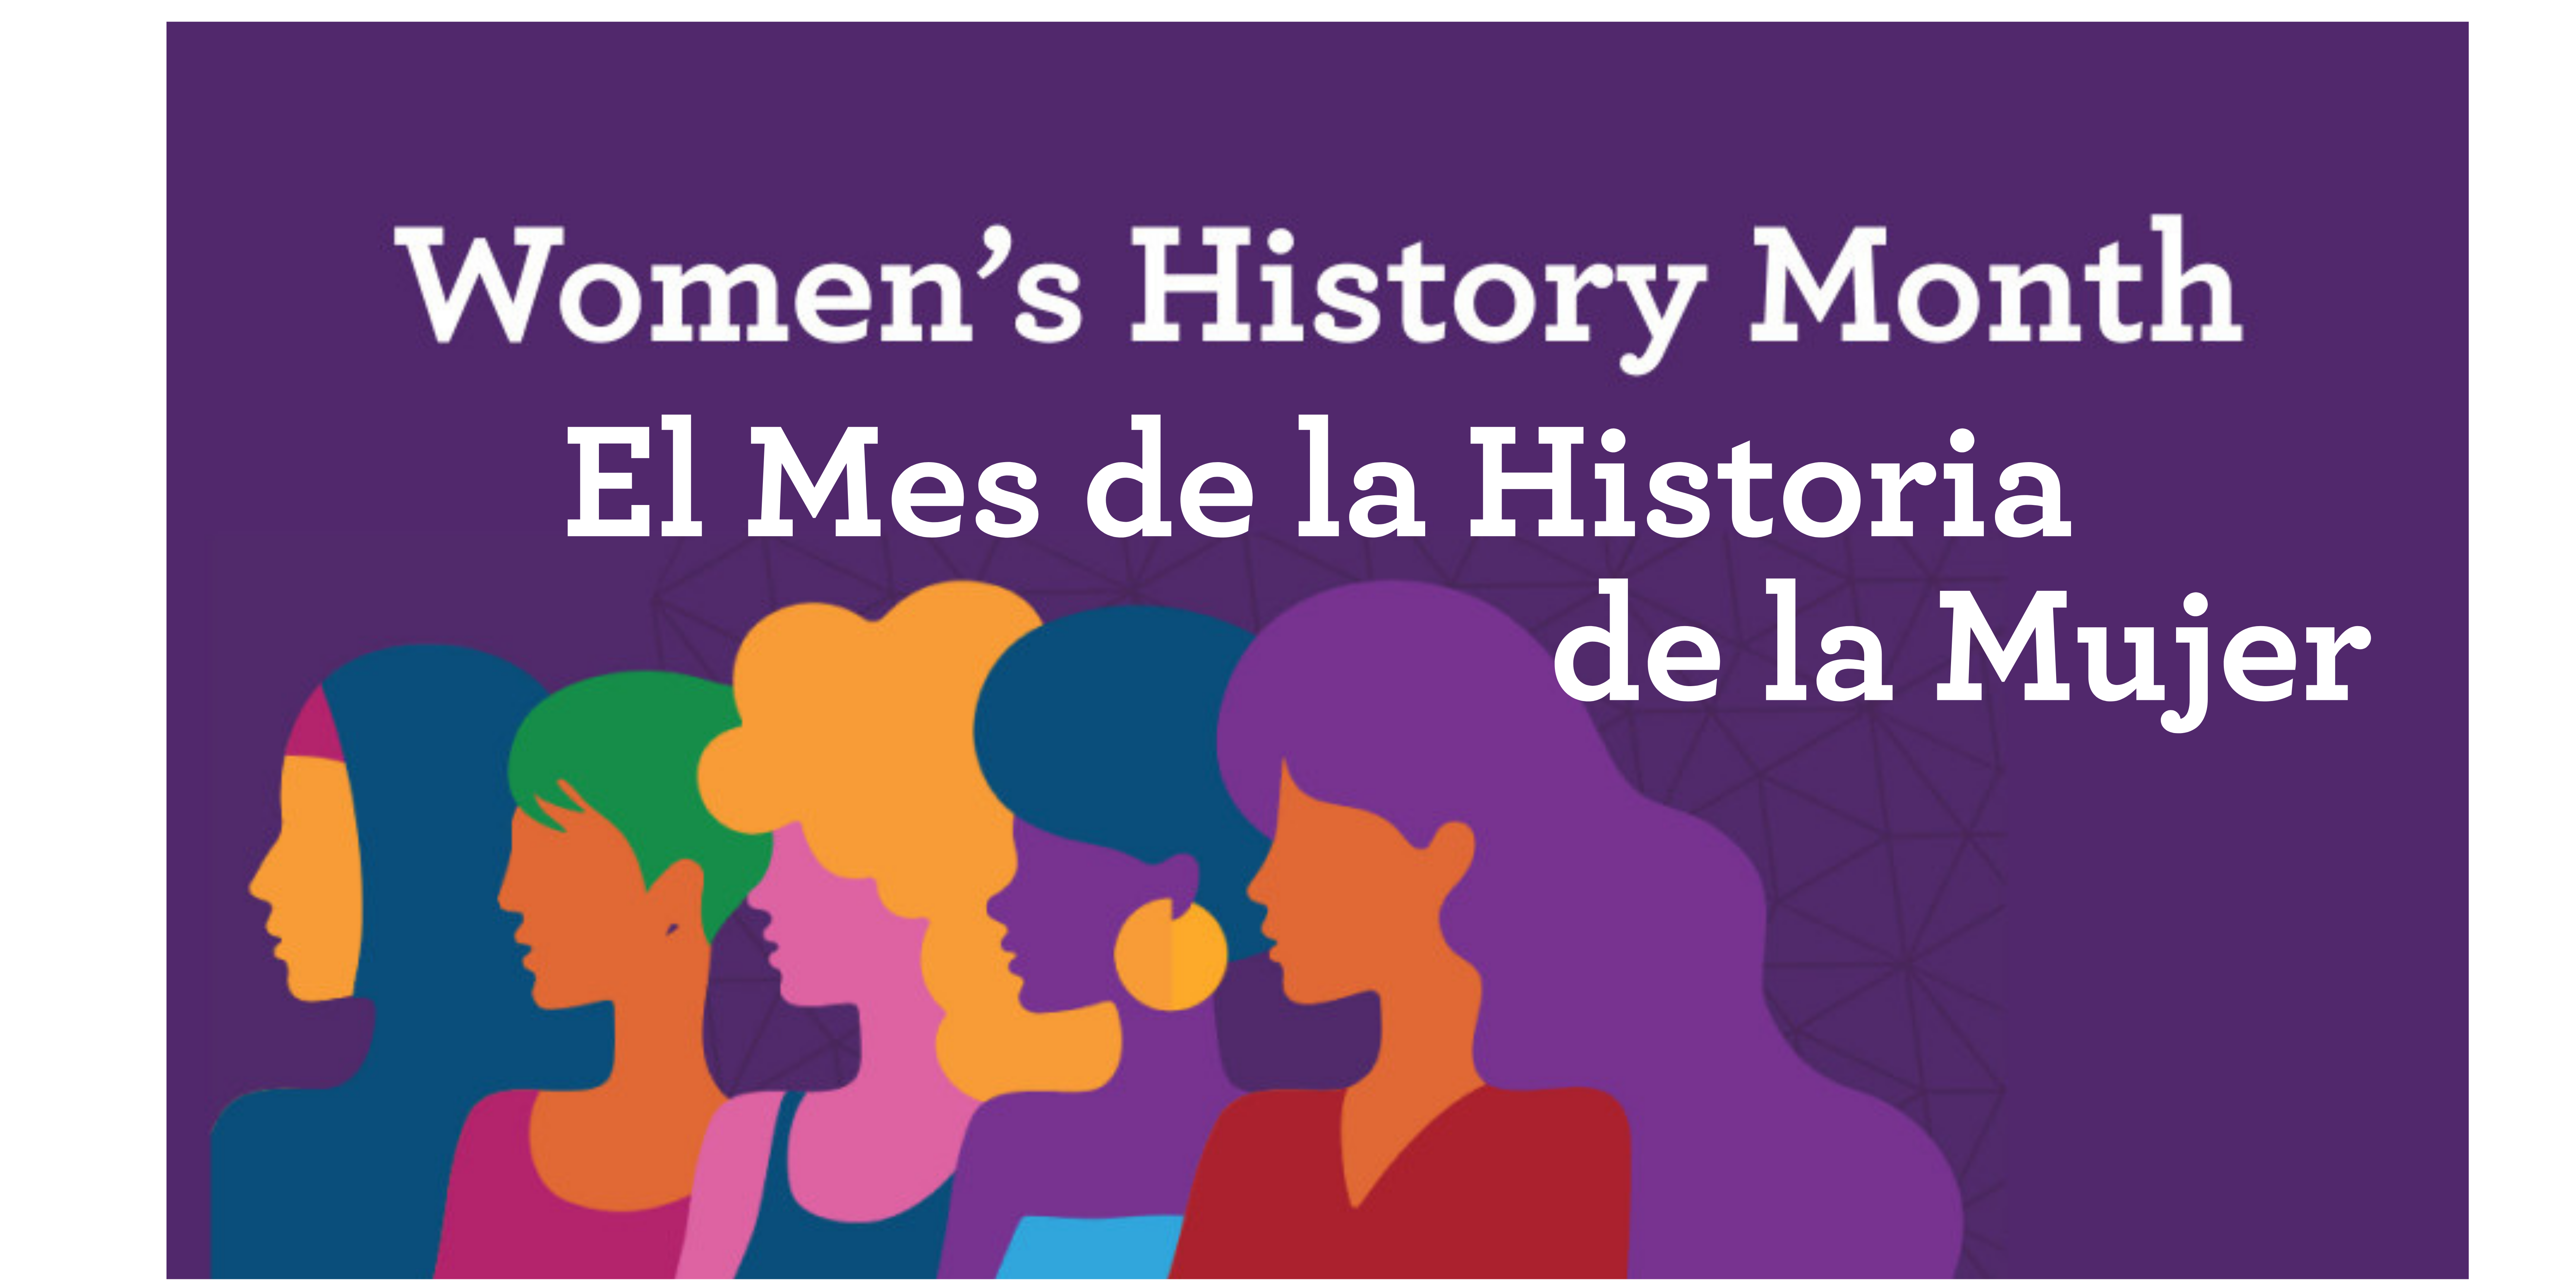 White text "Women's History Month" and "El Mes de la HIstoria de la Mujer" on purple background with silhouettes of women.